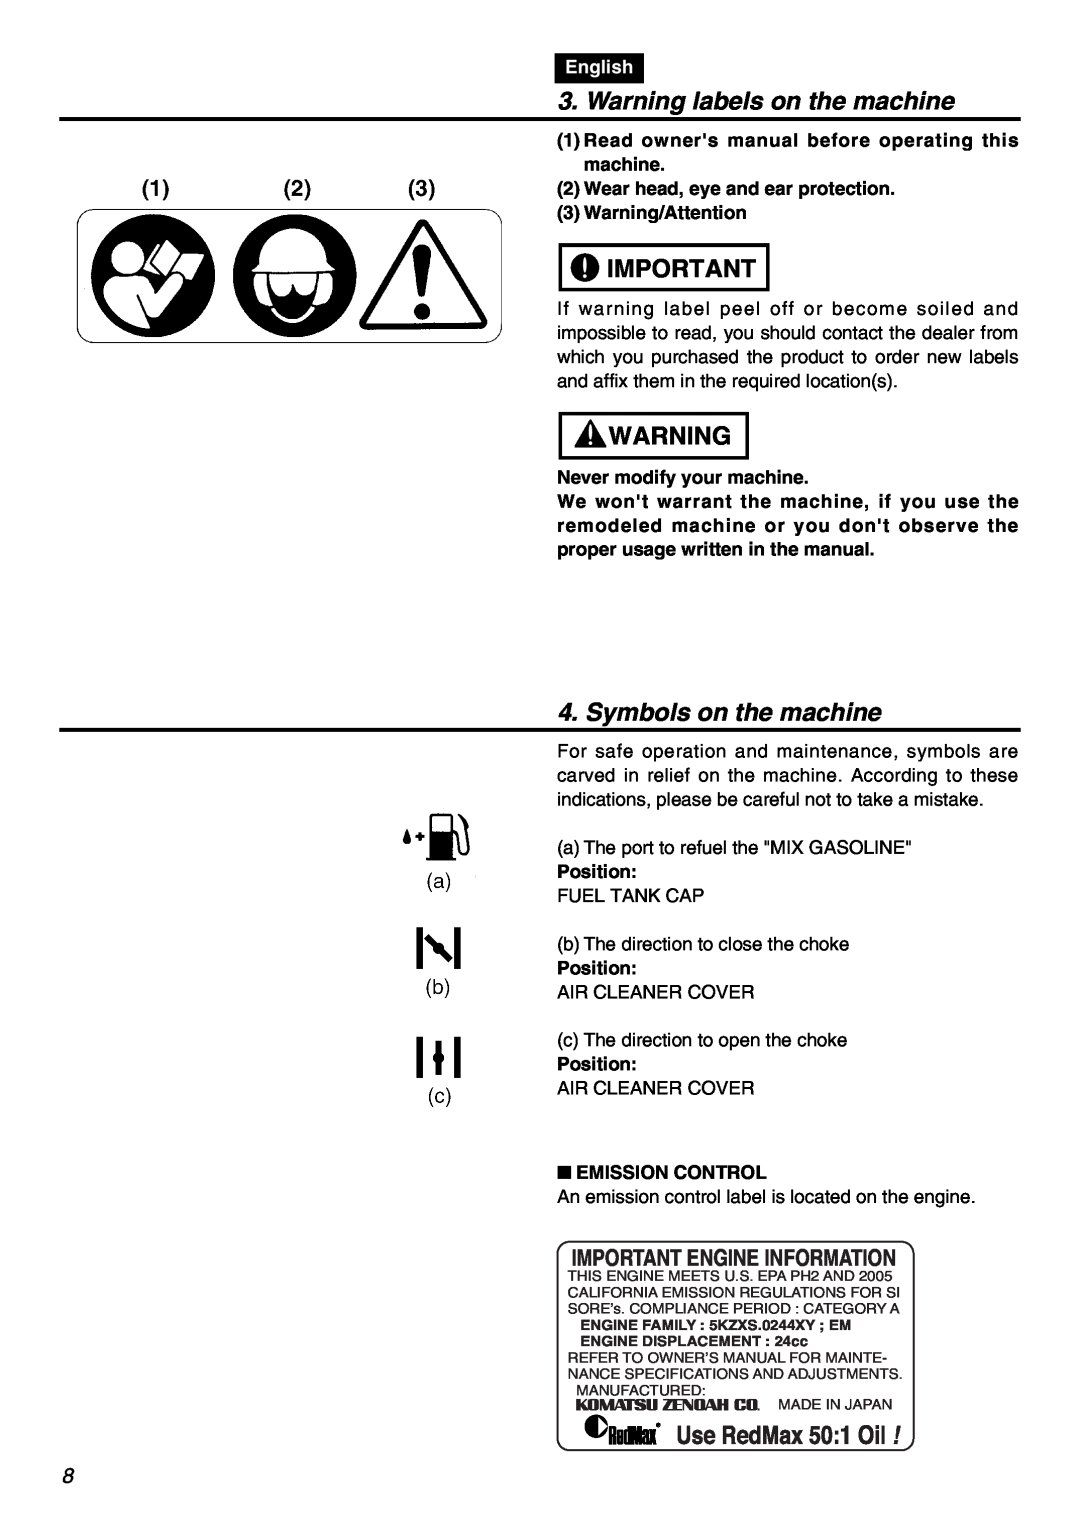 RedMax SRTZ2401F manual Warning labels on the machine, Symbols on the machine, Important Engine Information, English 